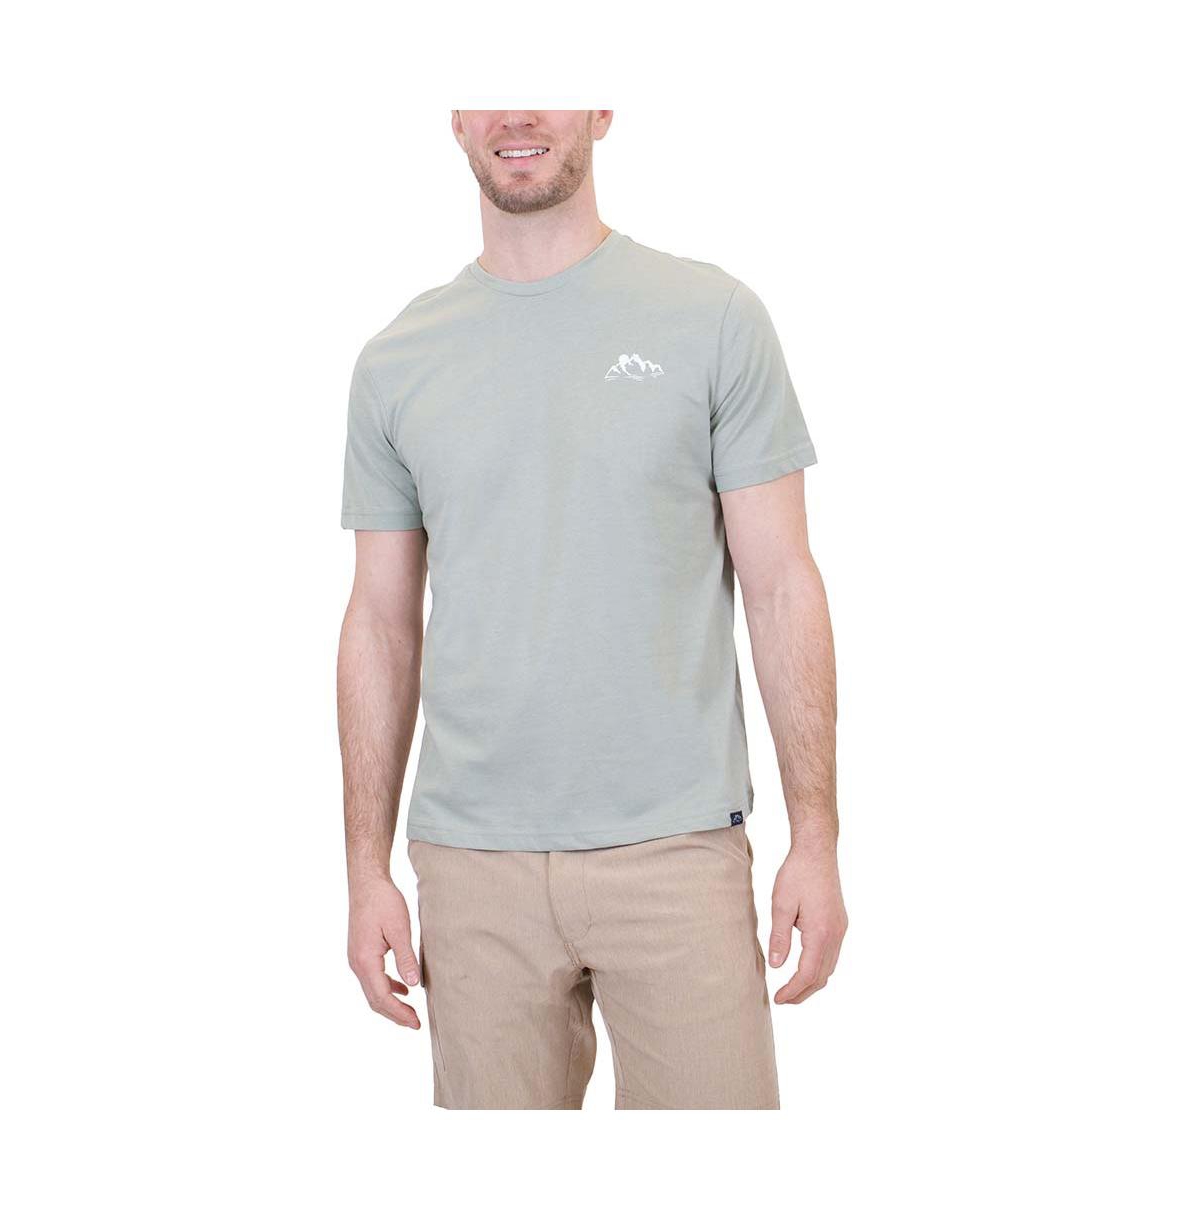 Men's Beach Cowboy Graphic T-Shirt - Iceberg green heather